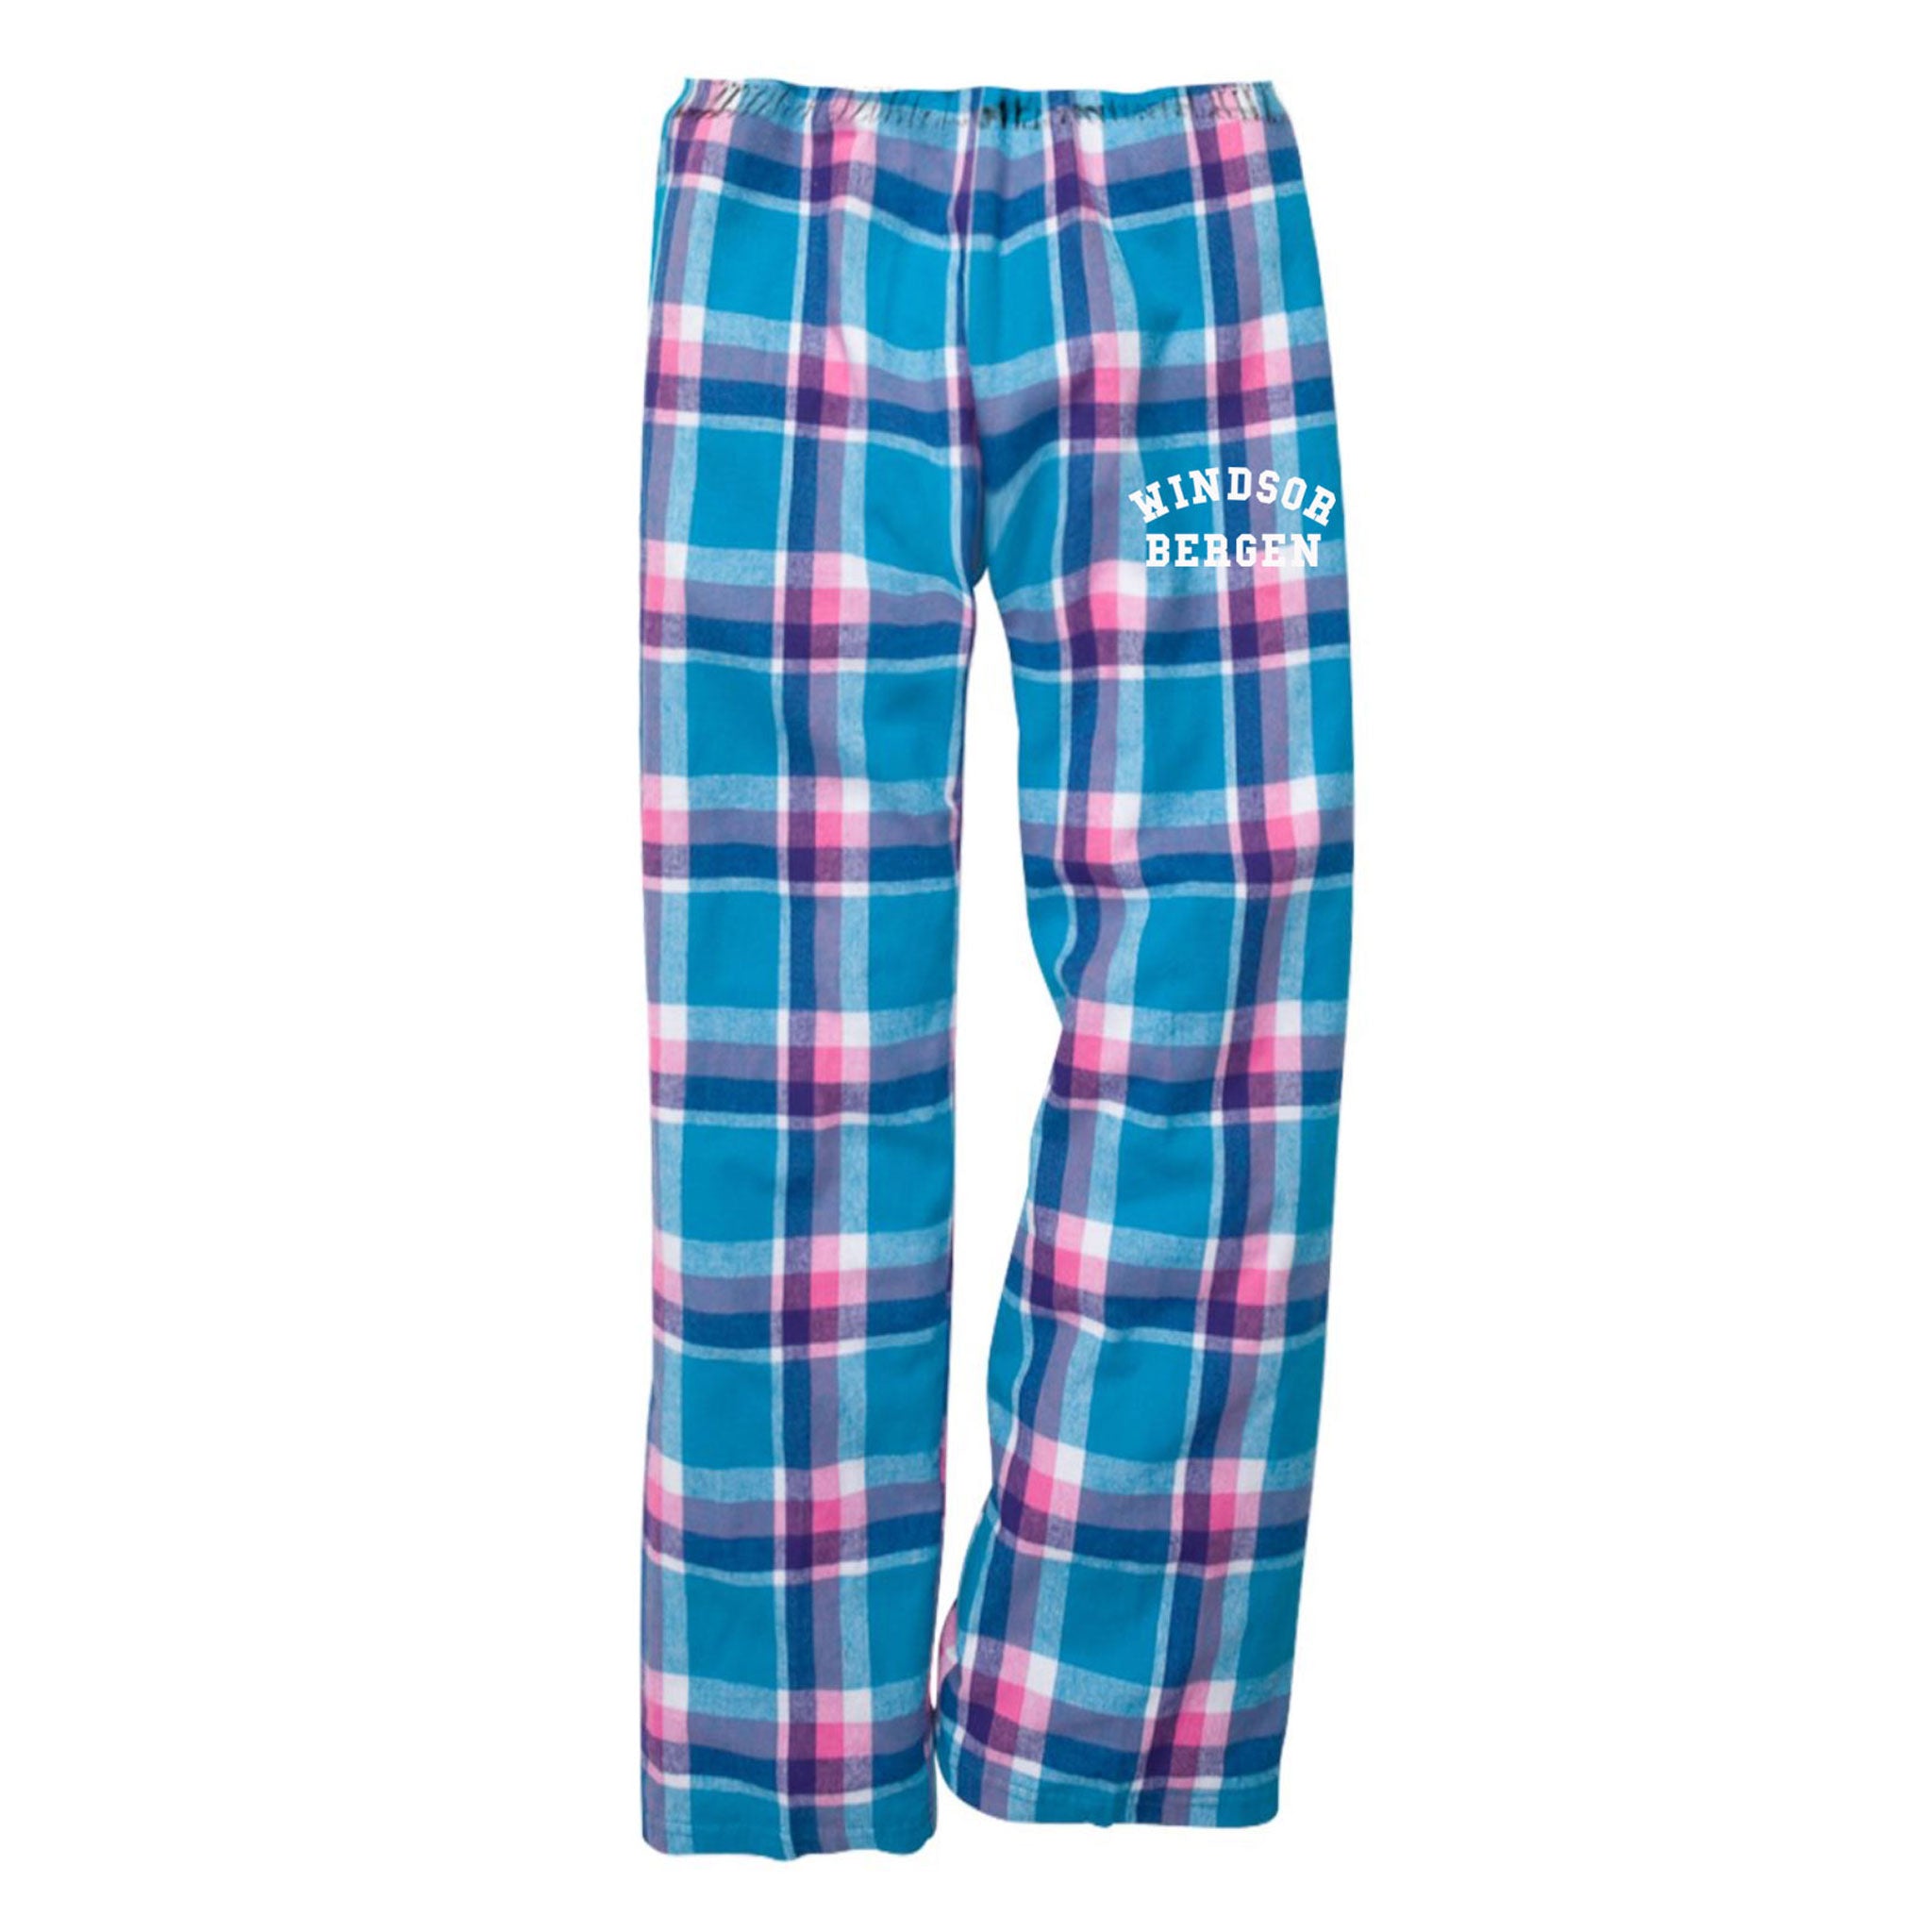 Windsor Bergen Academy Adult Pajama Pants - Pacific Surf